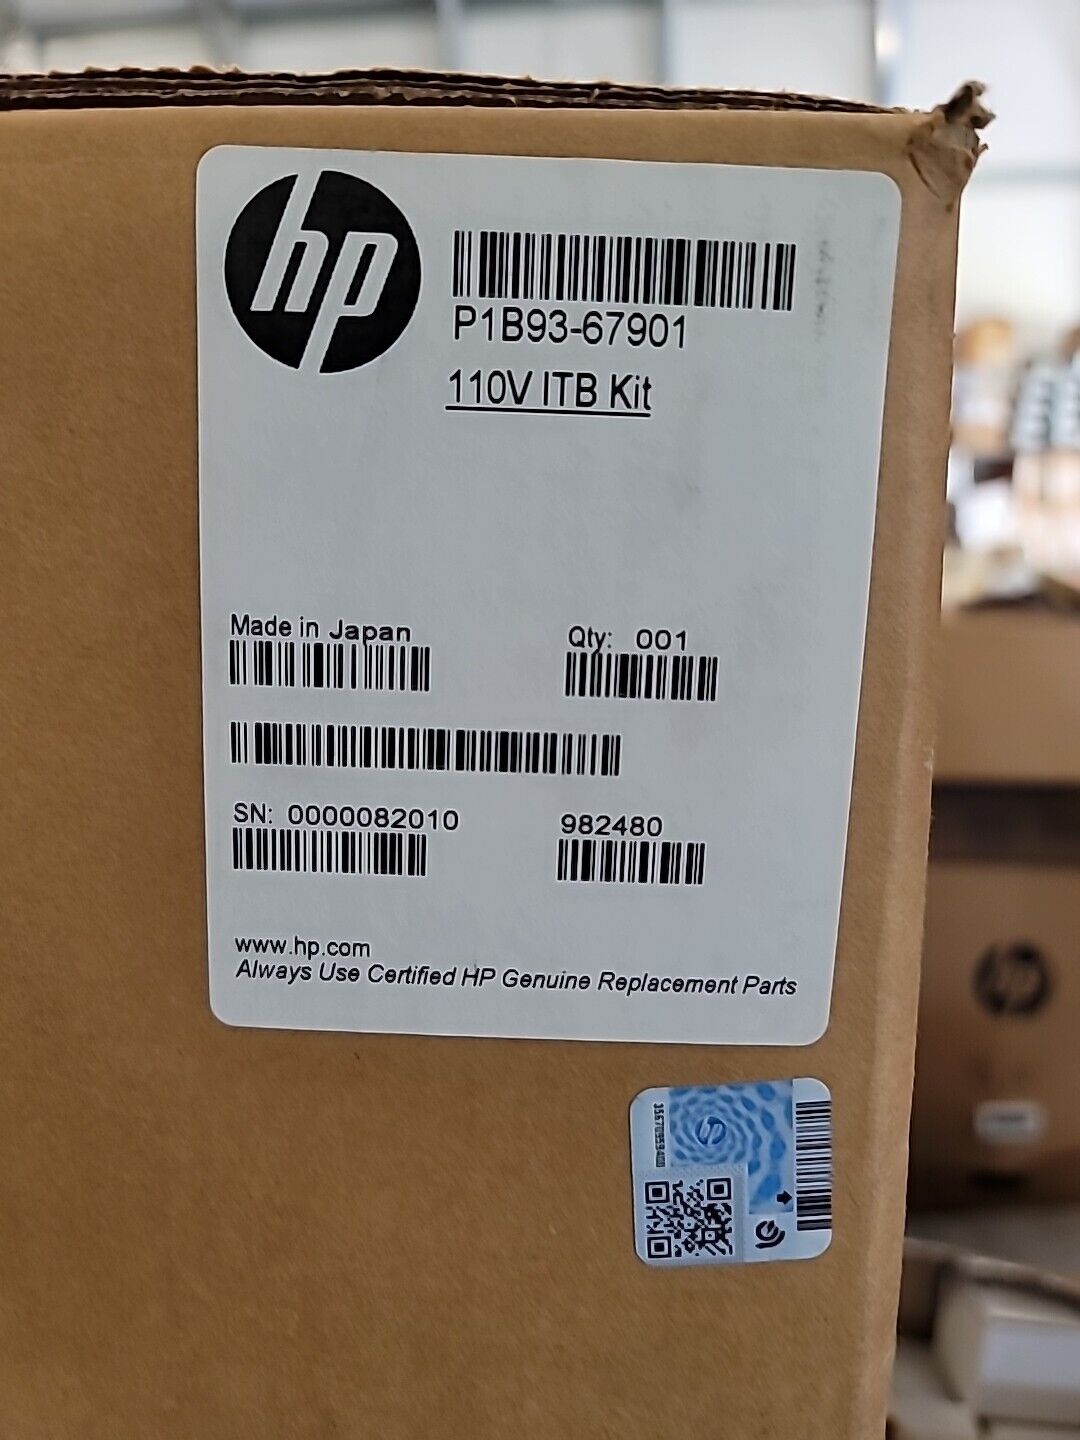 HP P1B93A P1B93-67901 Transfer Belt Kit 150000 Page-Yield New Sealed Box QTY